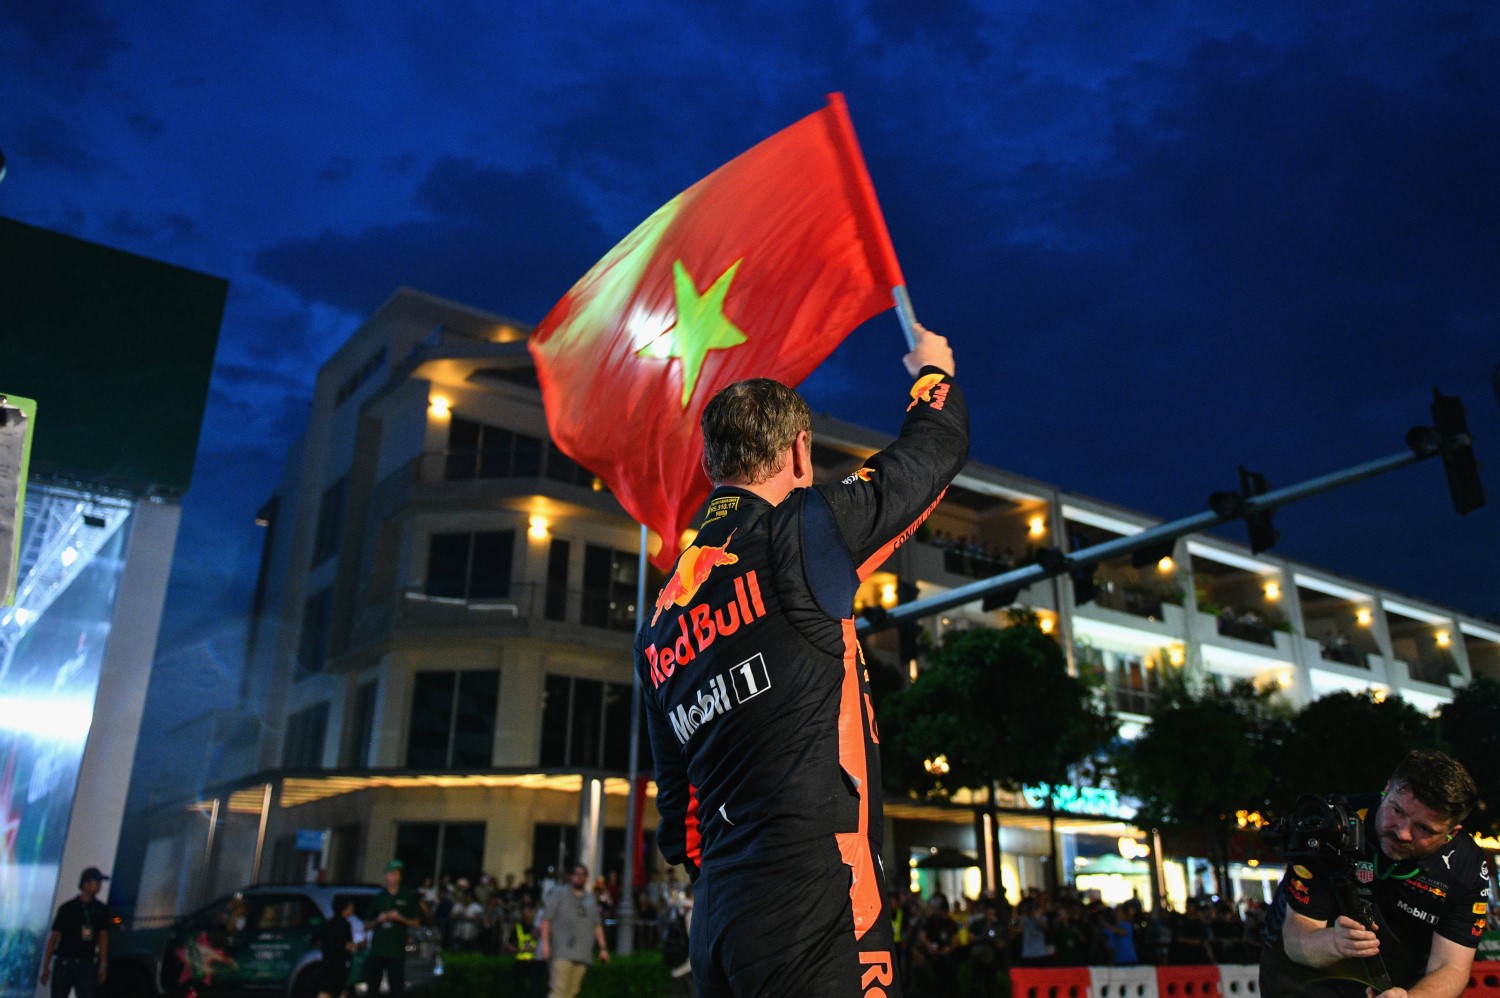 David Coulthard waves the Vietnam flag